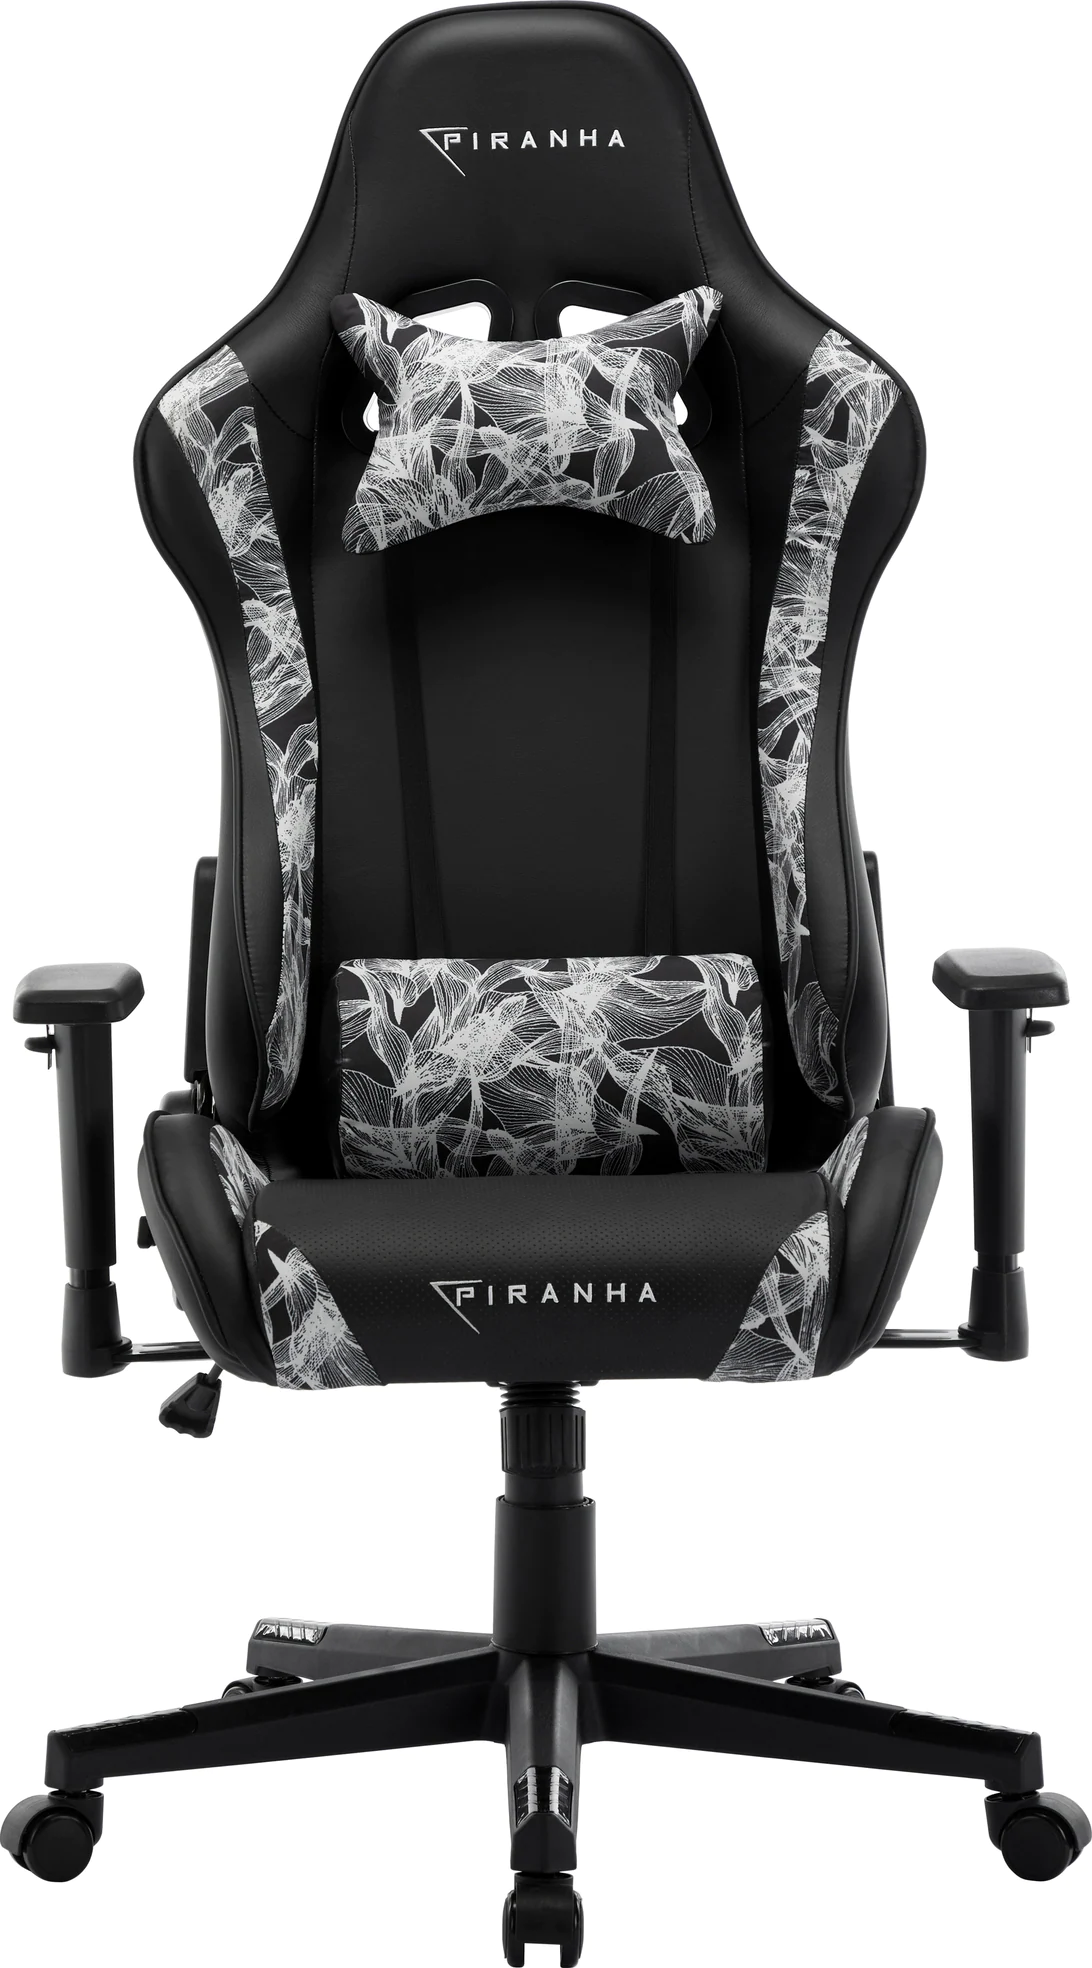  Bild på Piranha Bite Gaming Chair - Fine Web gamingstol